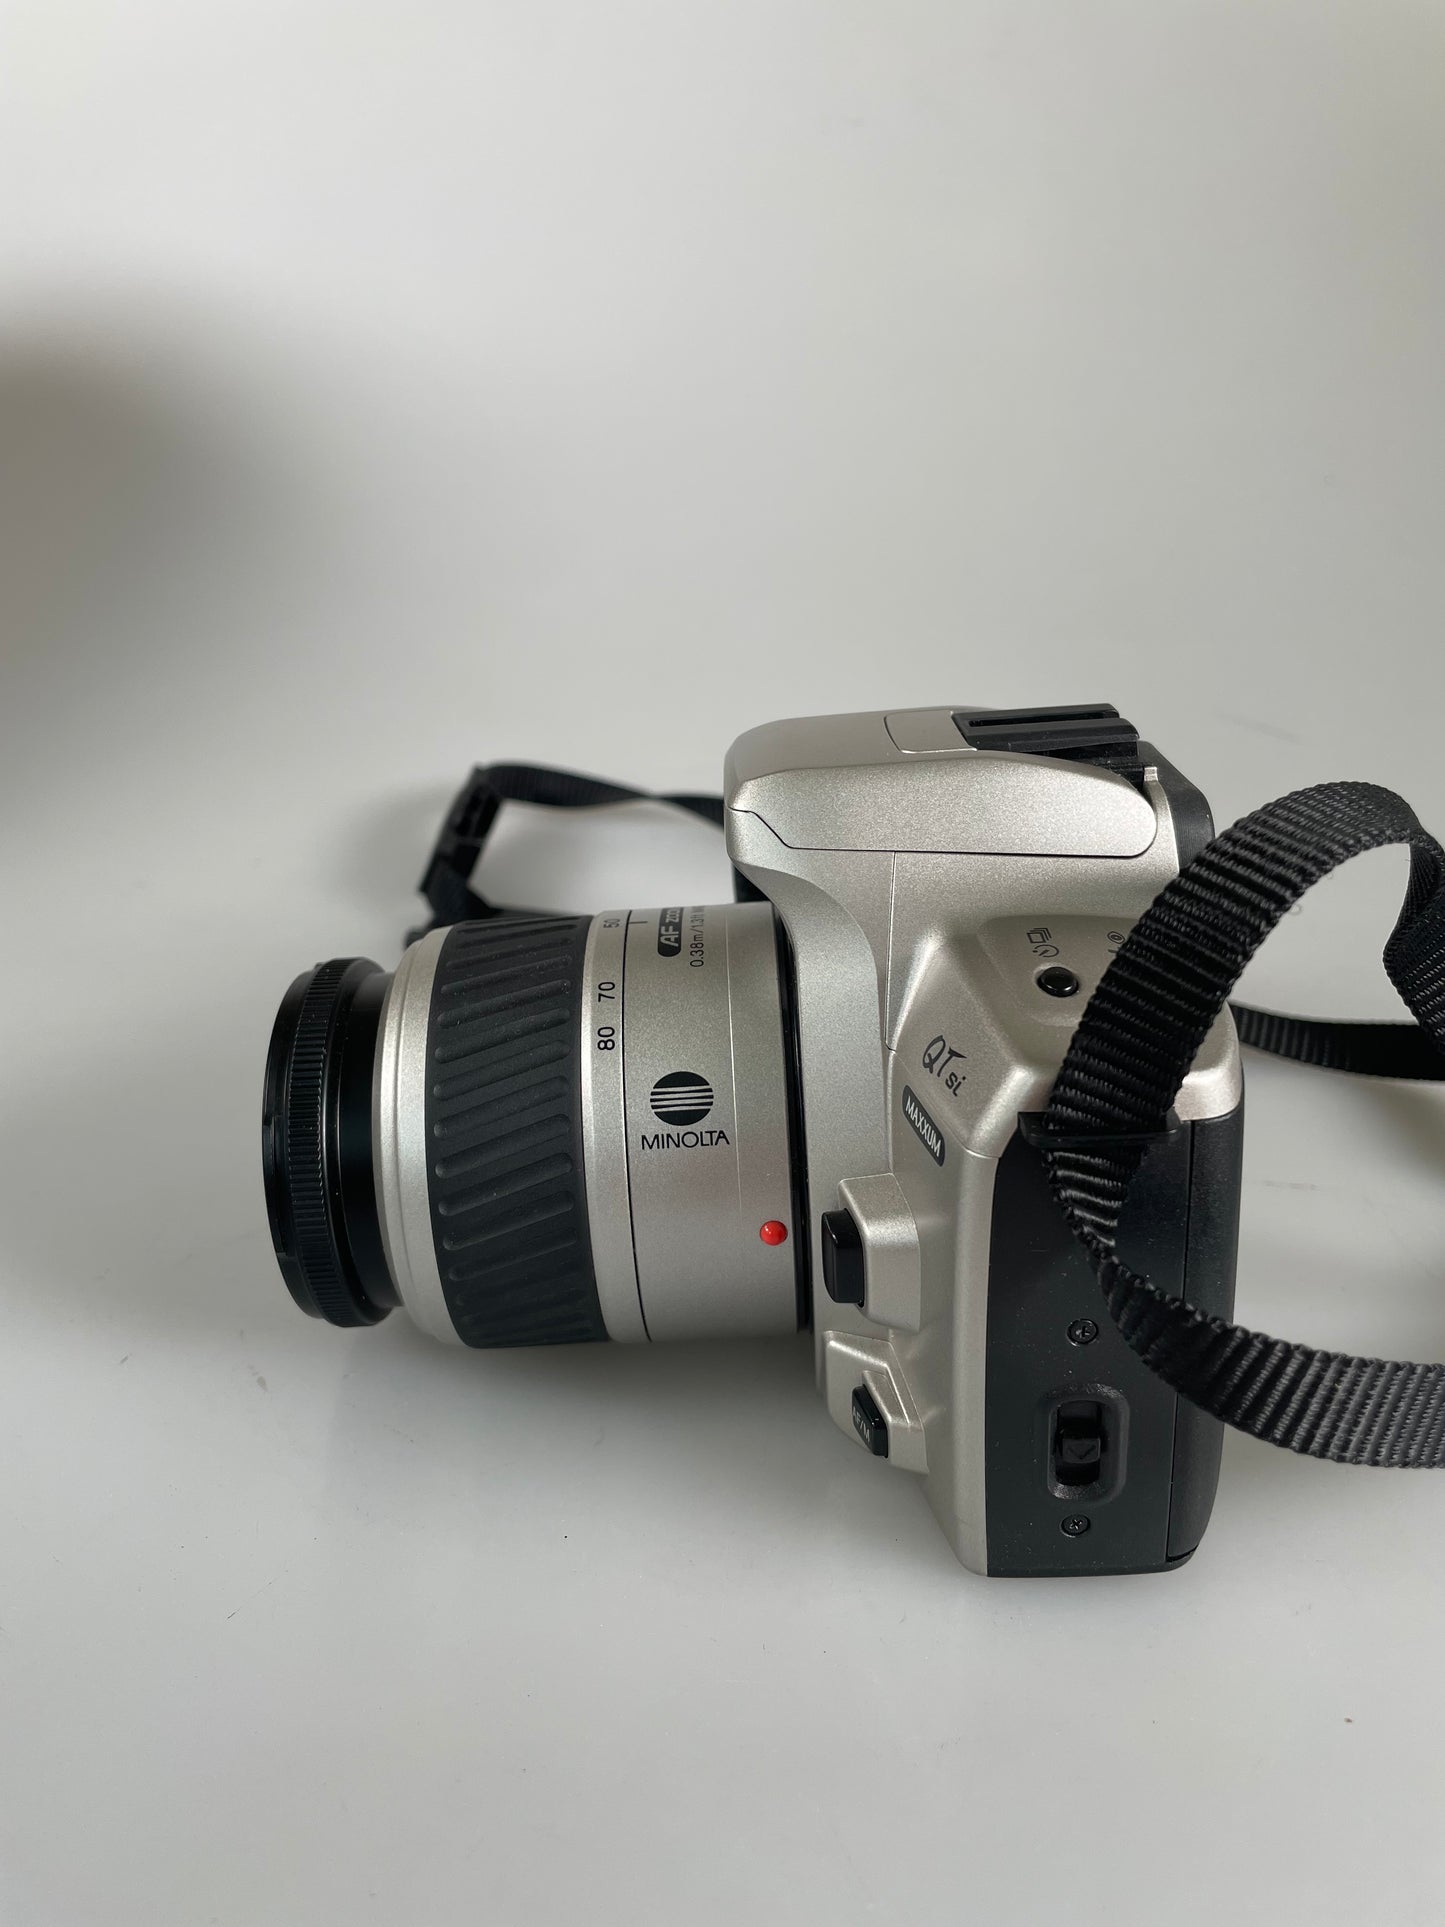 Minolta Maxxum QTsi 35mm SLR Film Camera with 35-80mm AF Zoom Lens